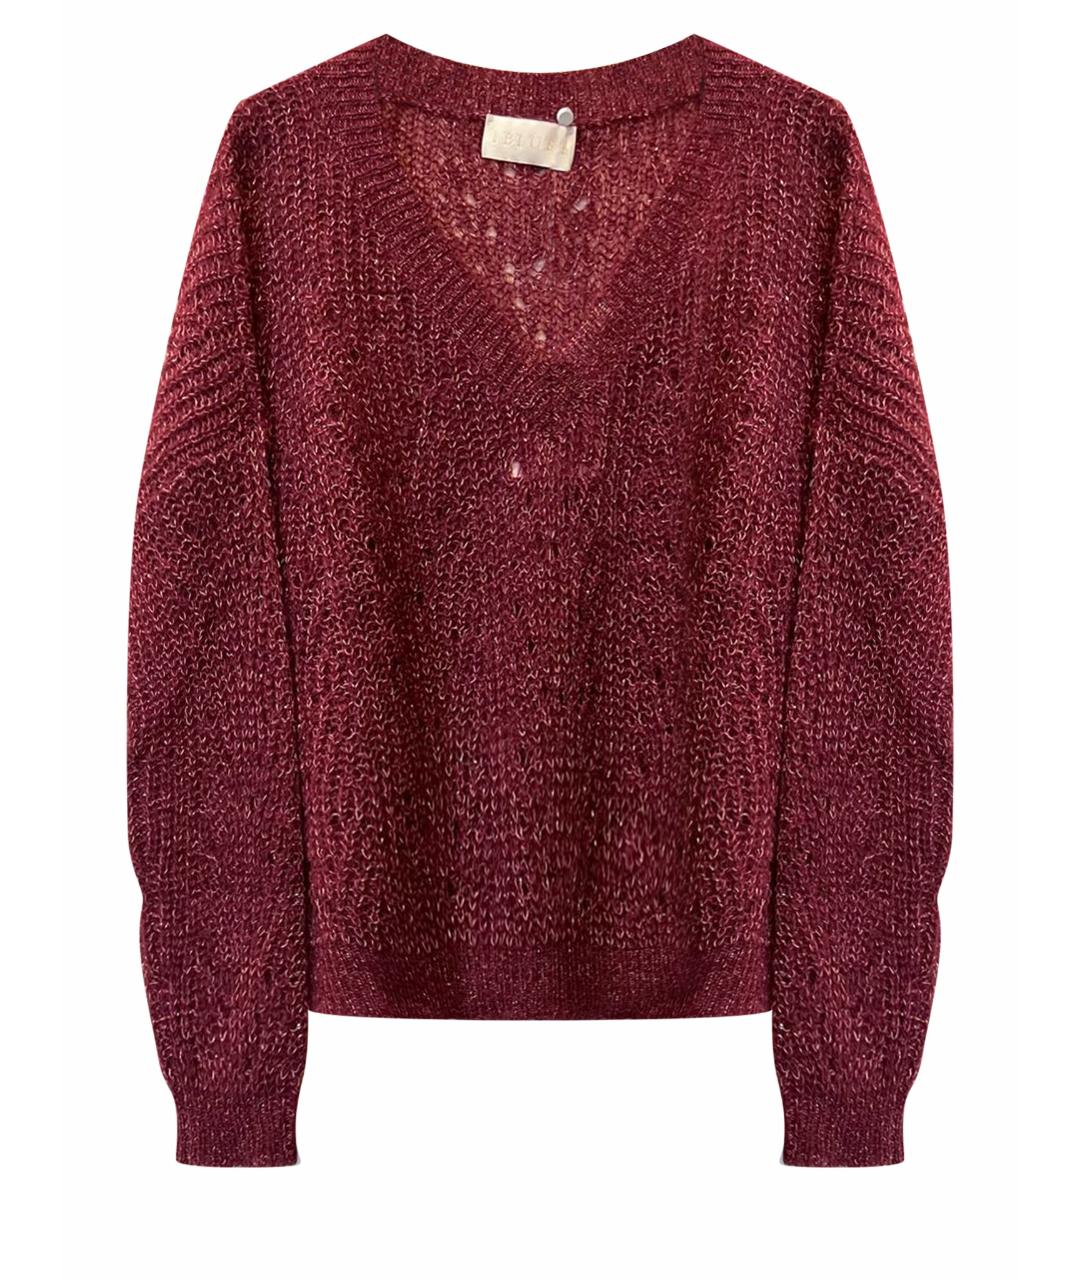 MARINA RINALDI Бордовый шерстяной джемпер / свитер, фото 1